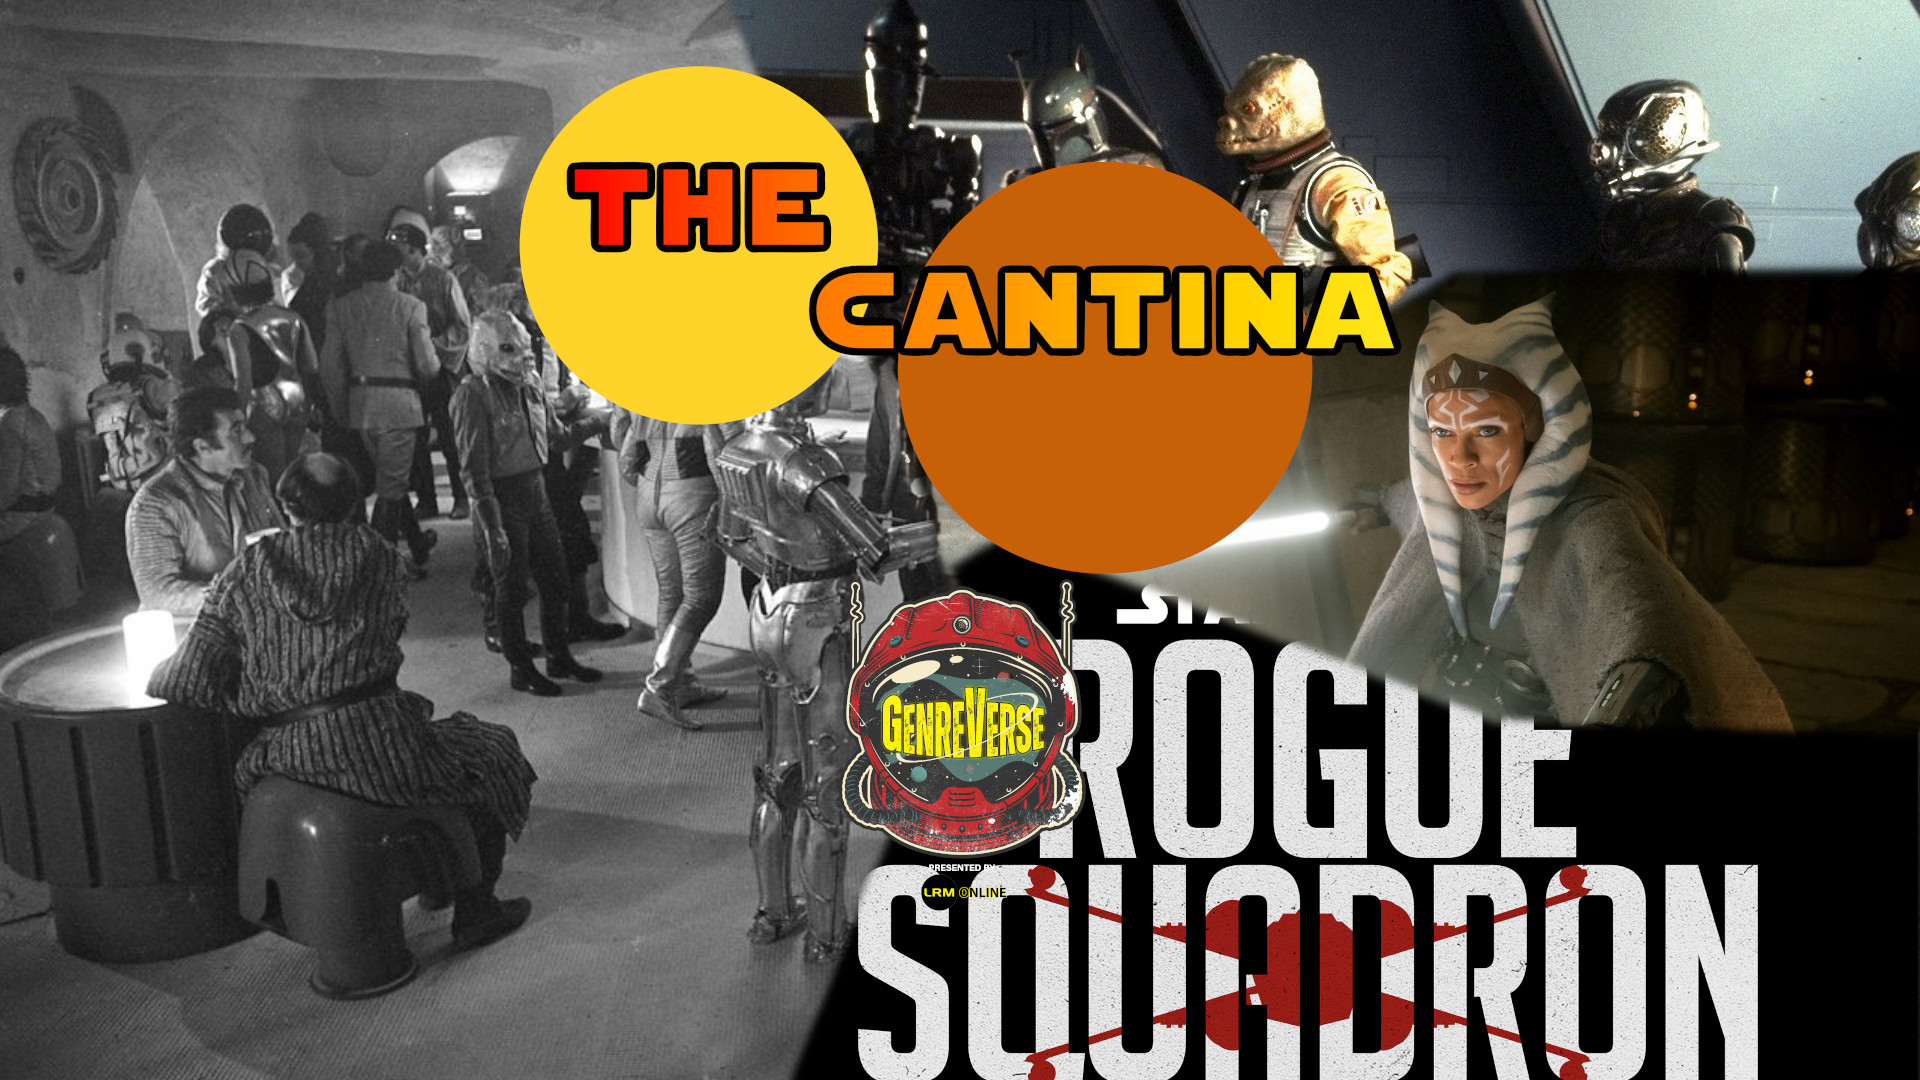 Kenobi Bounty Hunter Rumors, Christopher Lloyd In Ahsoka, Mike Stackpole’s Rogue Squadron Involvement Clarified | The Cantina